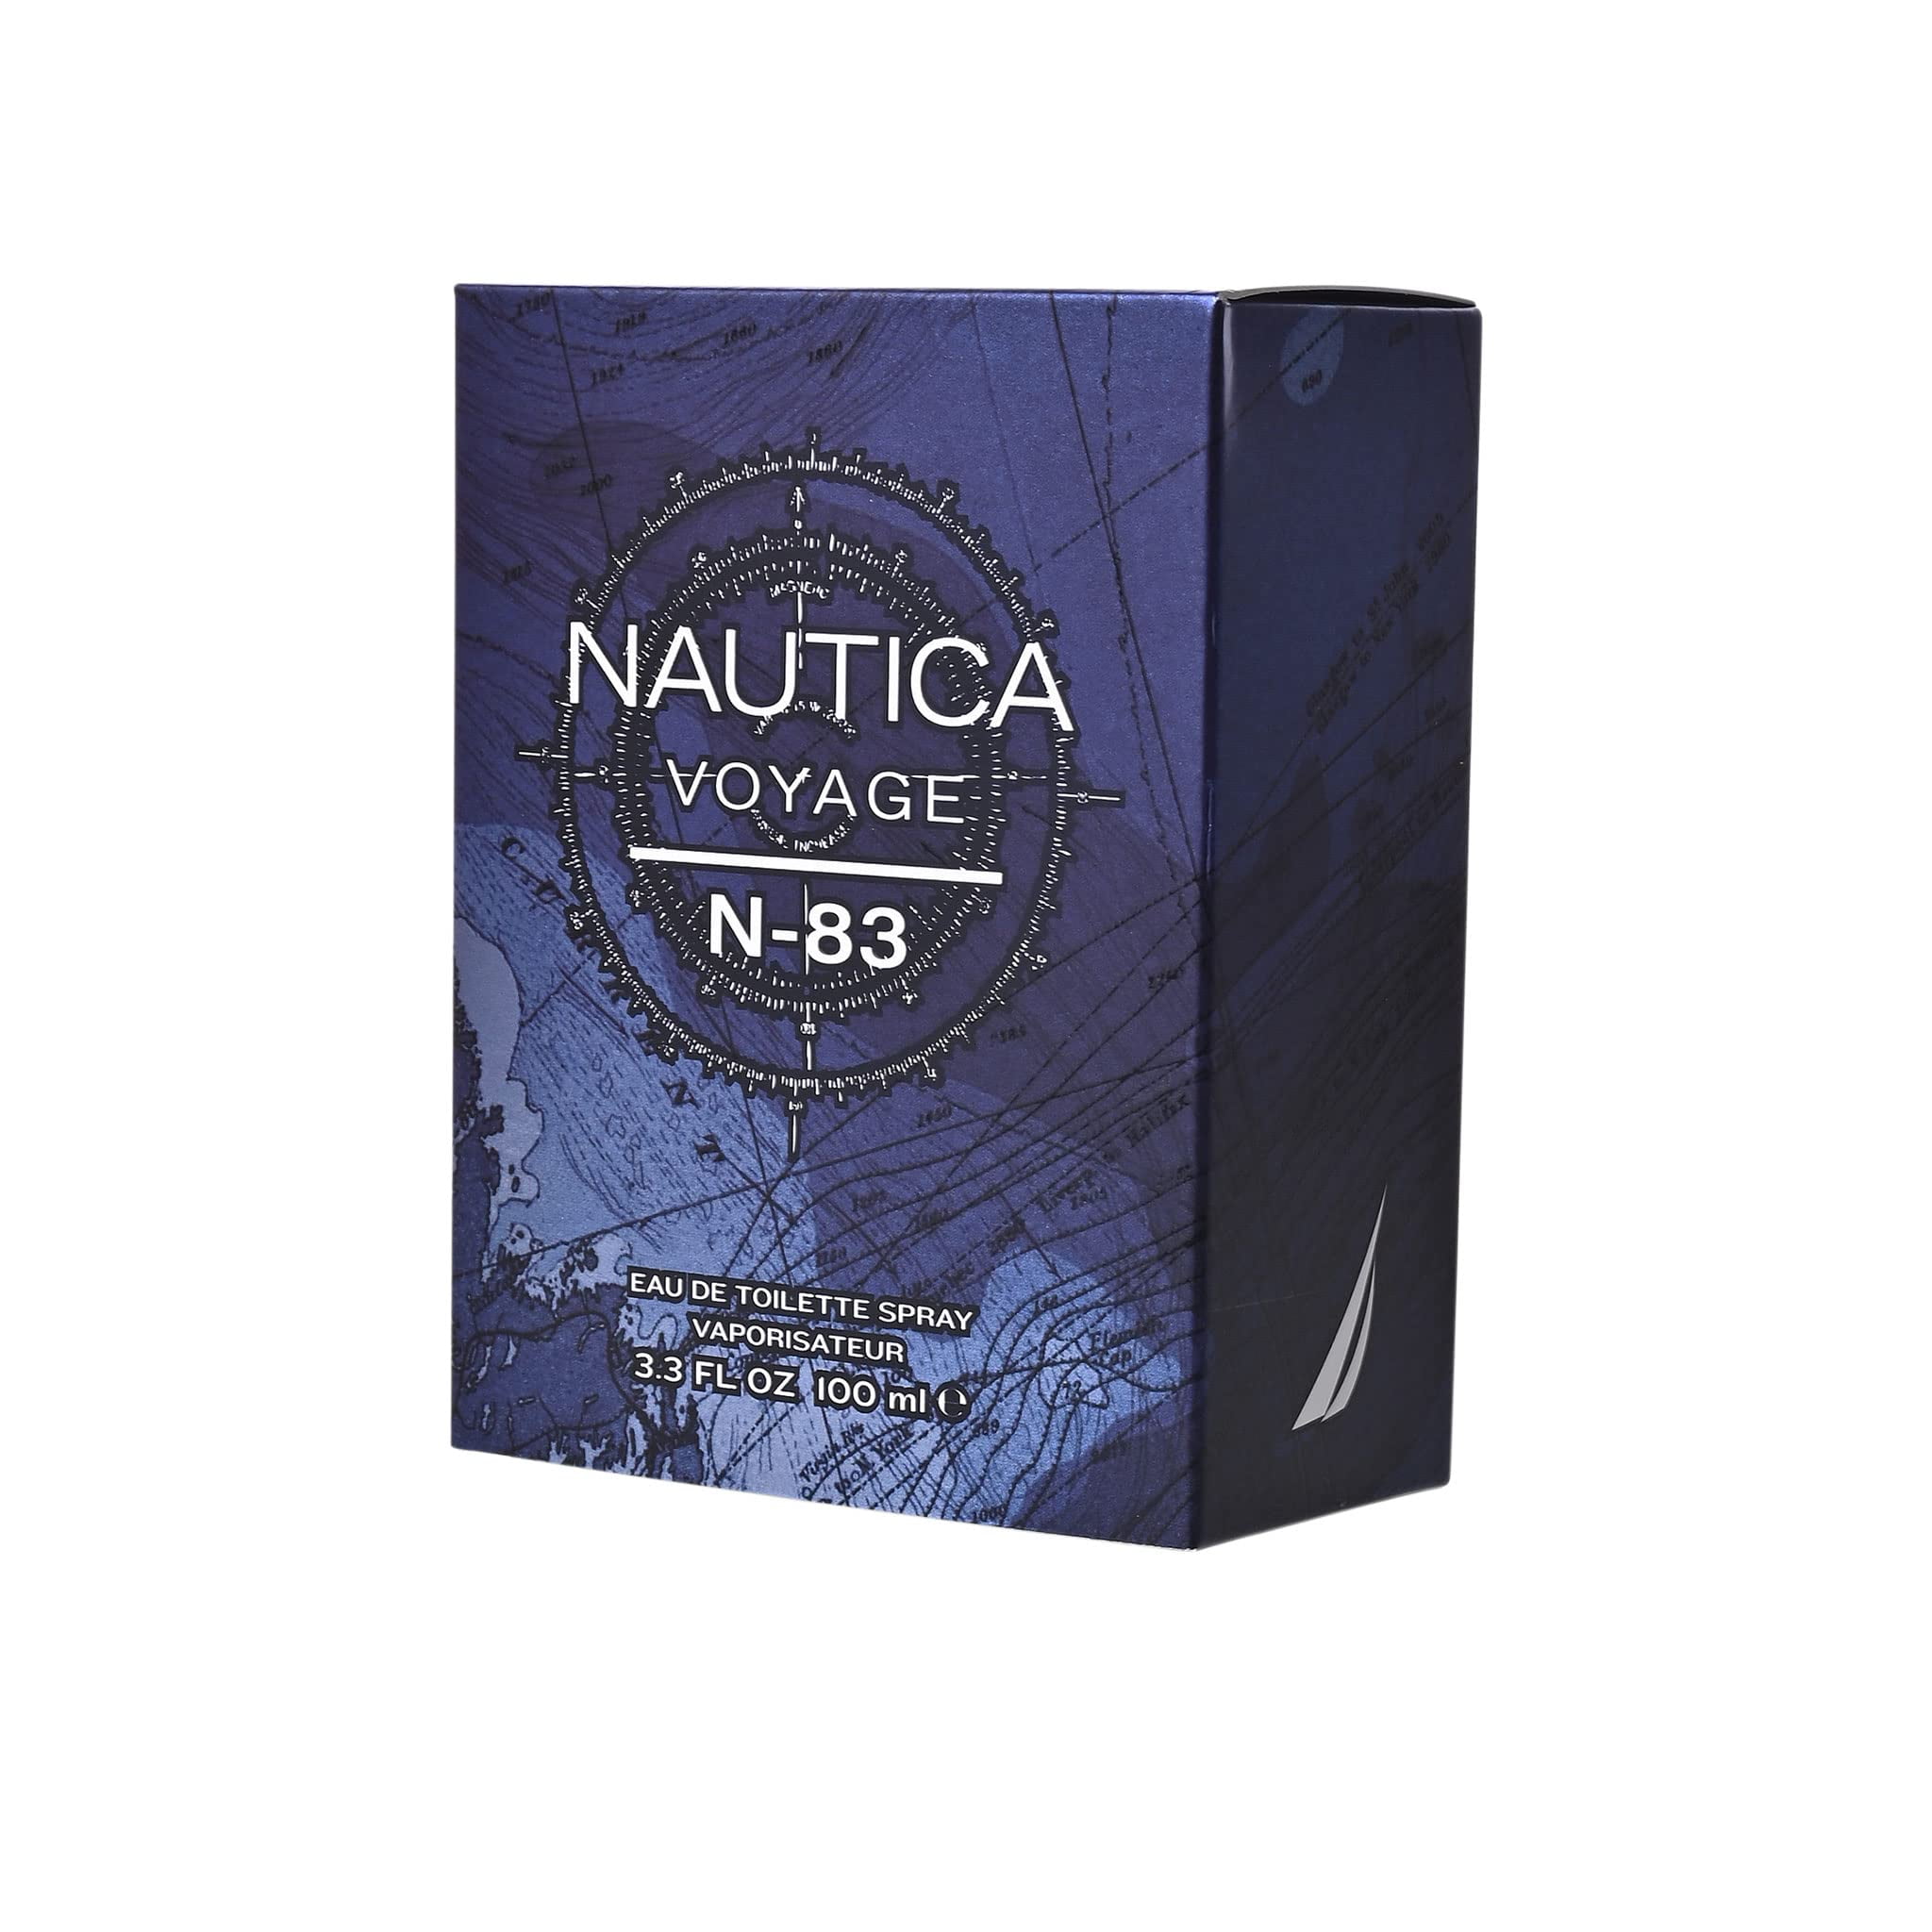 Nautica Voyage N-83 Eau de Toilette Spray, 3.3/3.4 Fl Oz 